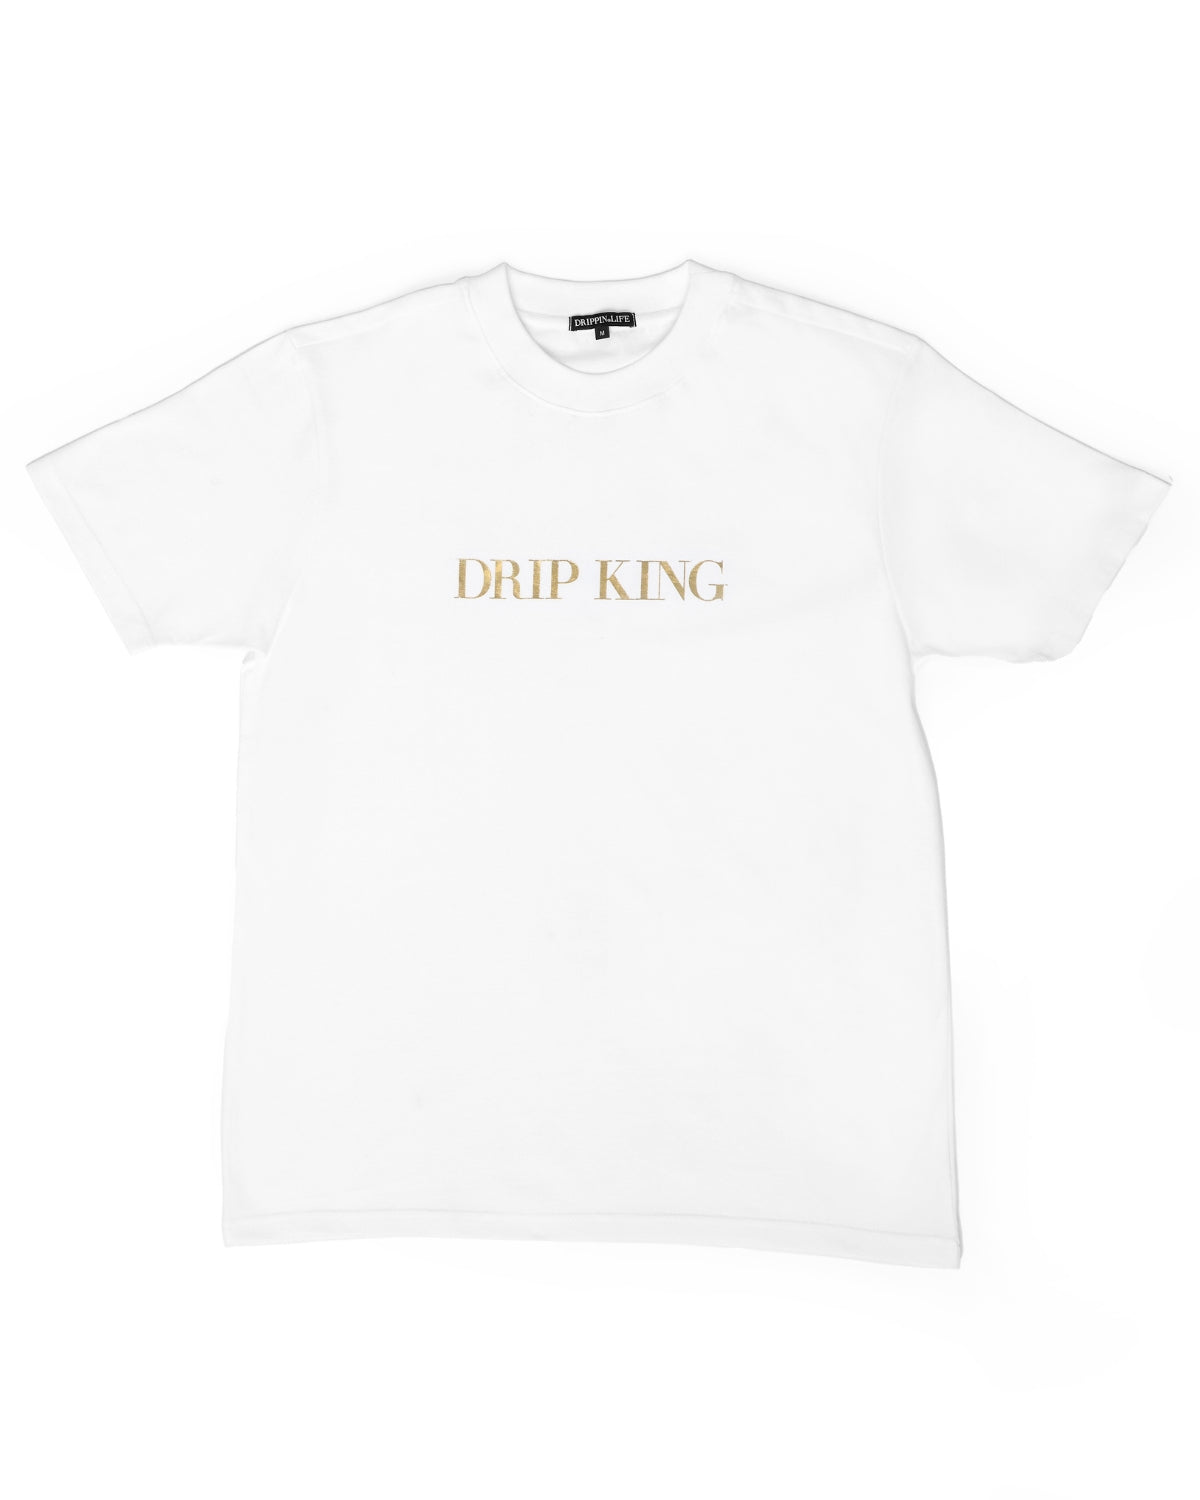 Drip King - White